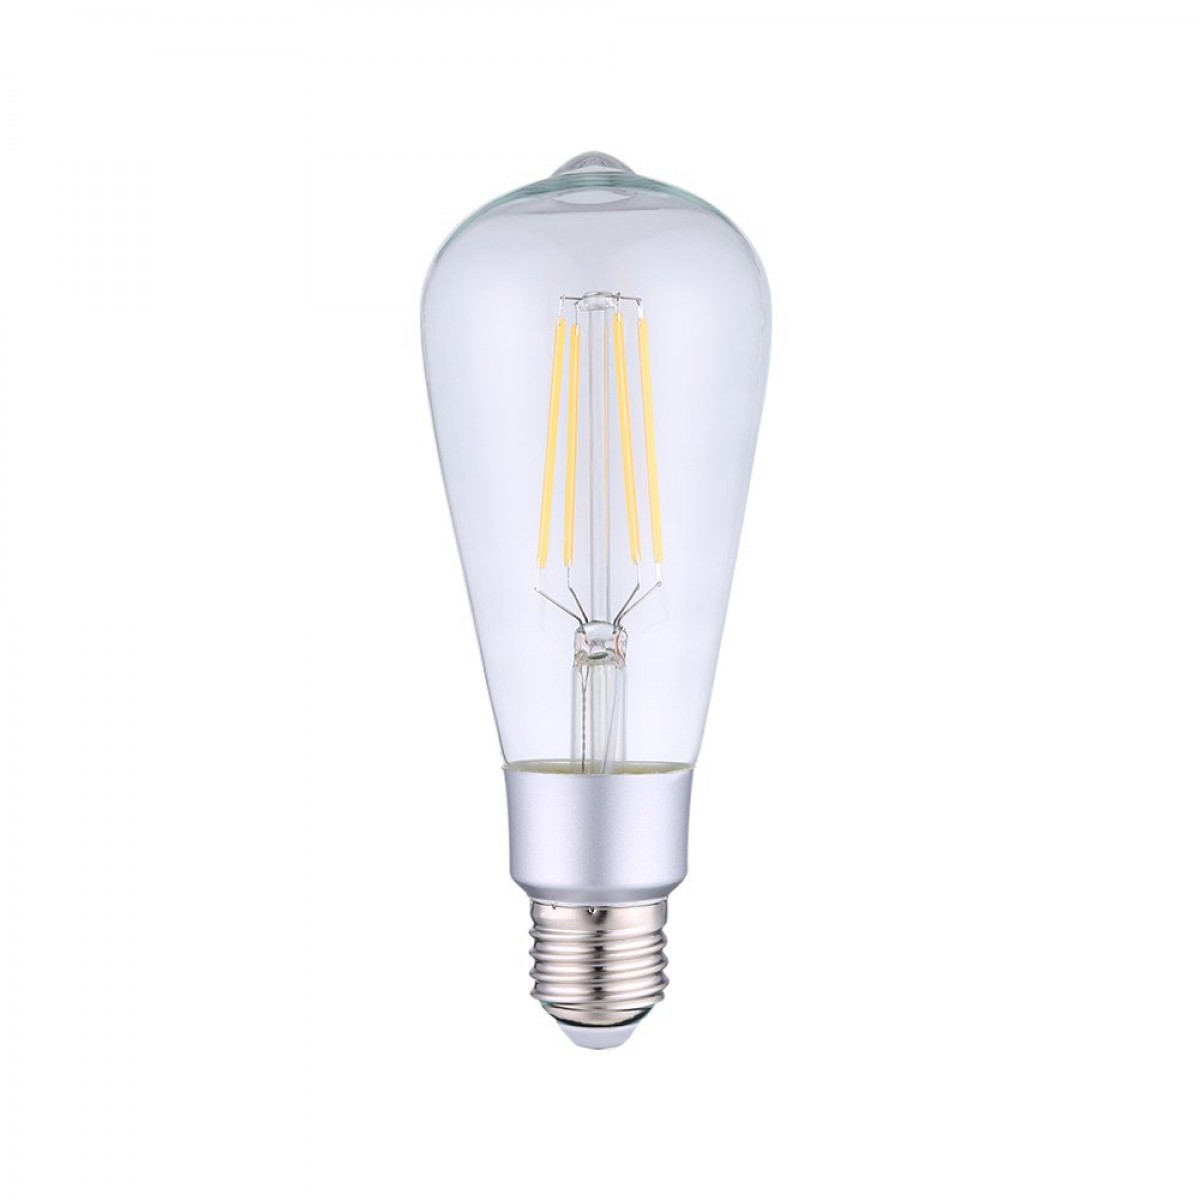 Shelly Vintage ST64 WLAN LED Lampe, warmweiß, dimmbar, E 27 Sockel, 7 Watt, 2.700 K